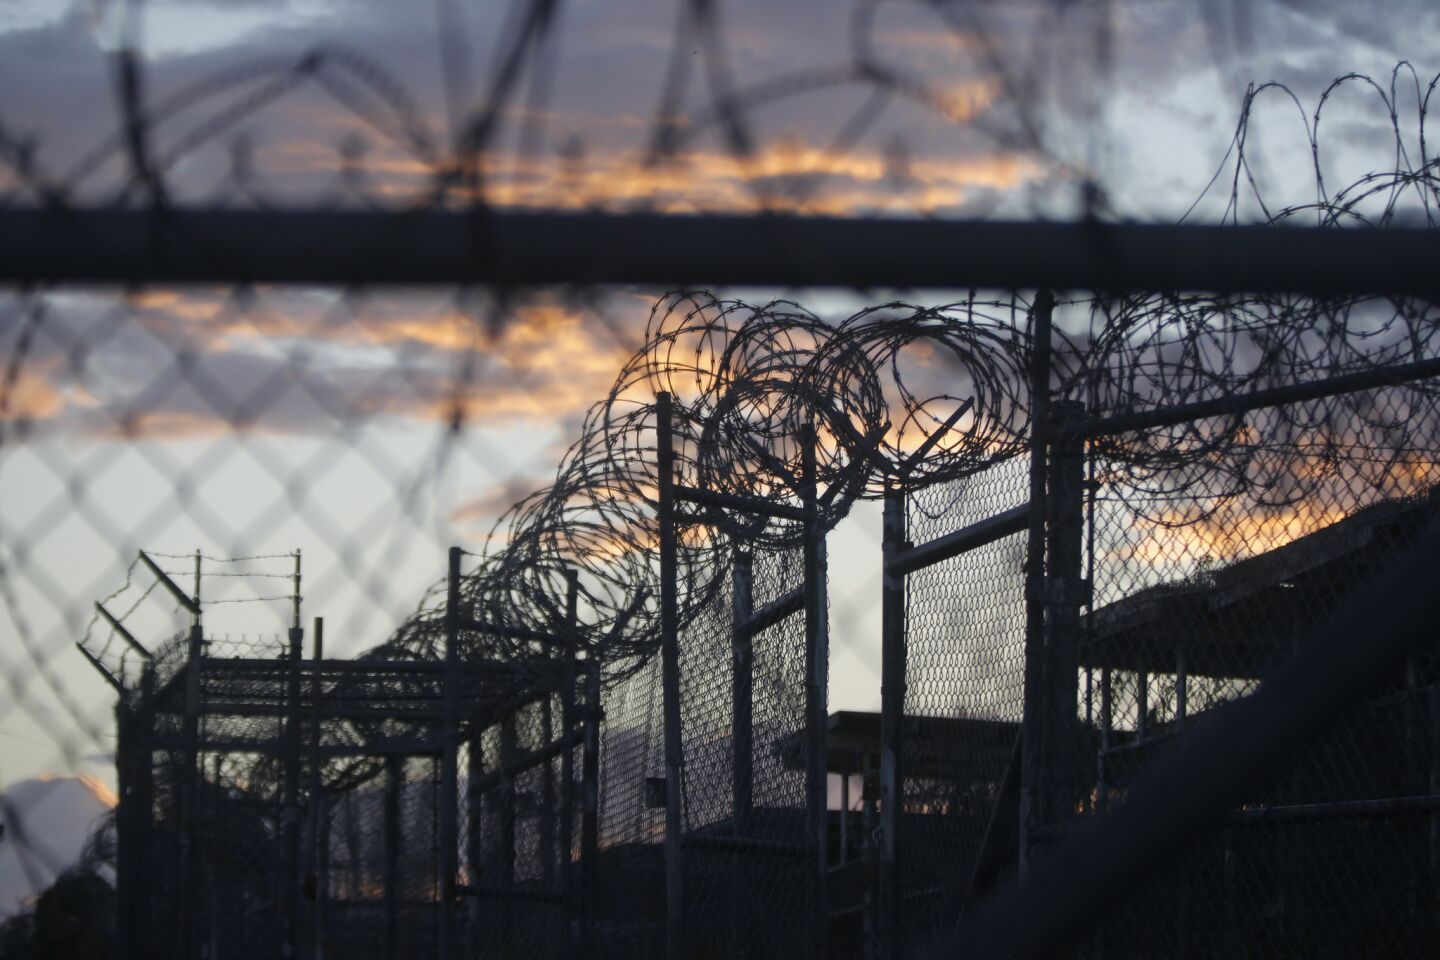 Guantanamo Bay | What's next?